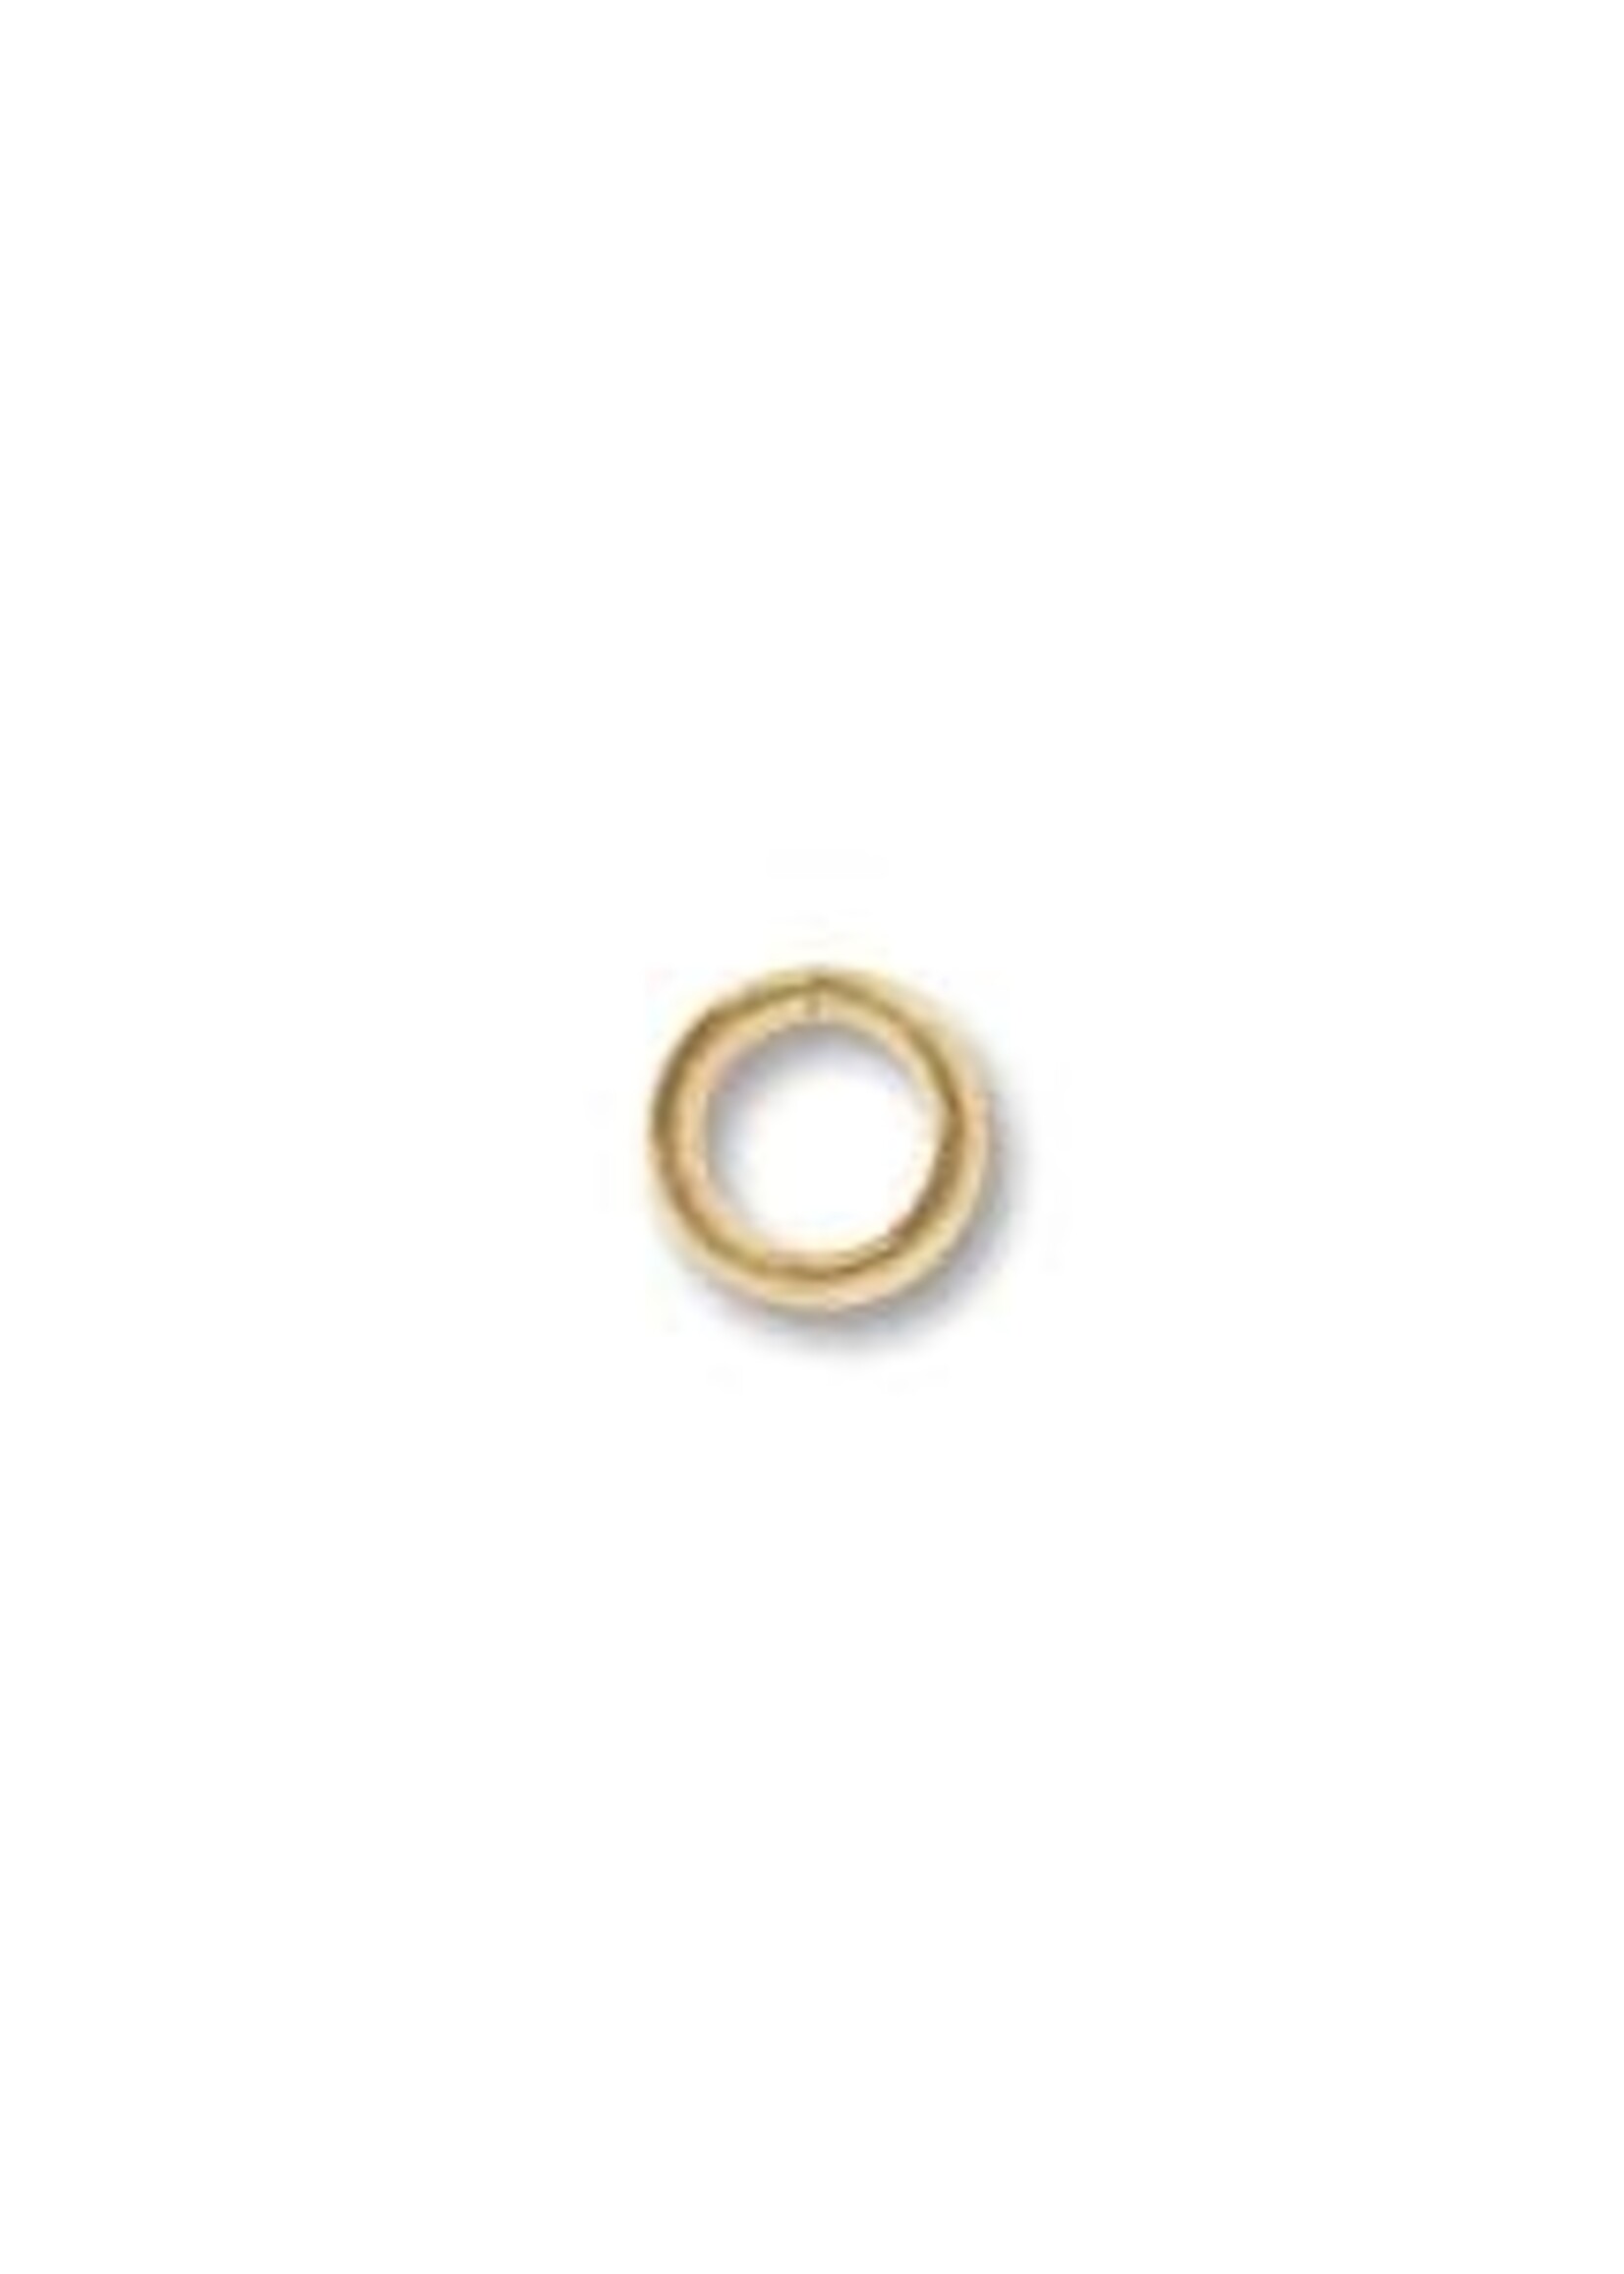 4mm Jump Ring 21ga Gold Plated Qty 144